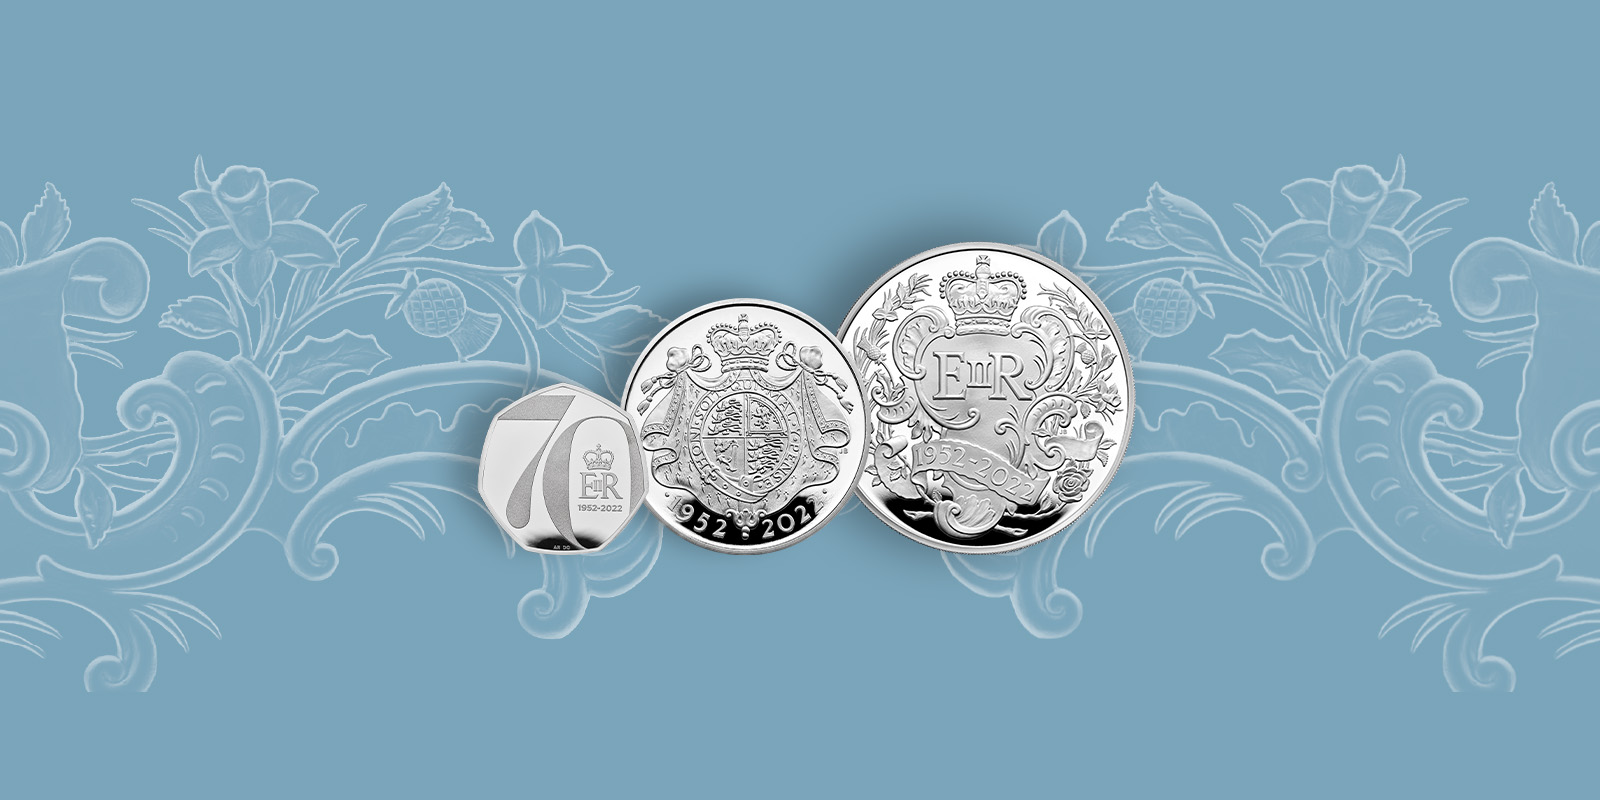 New Commemorative Coins